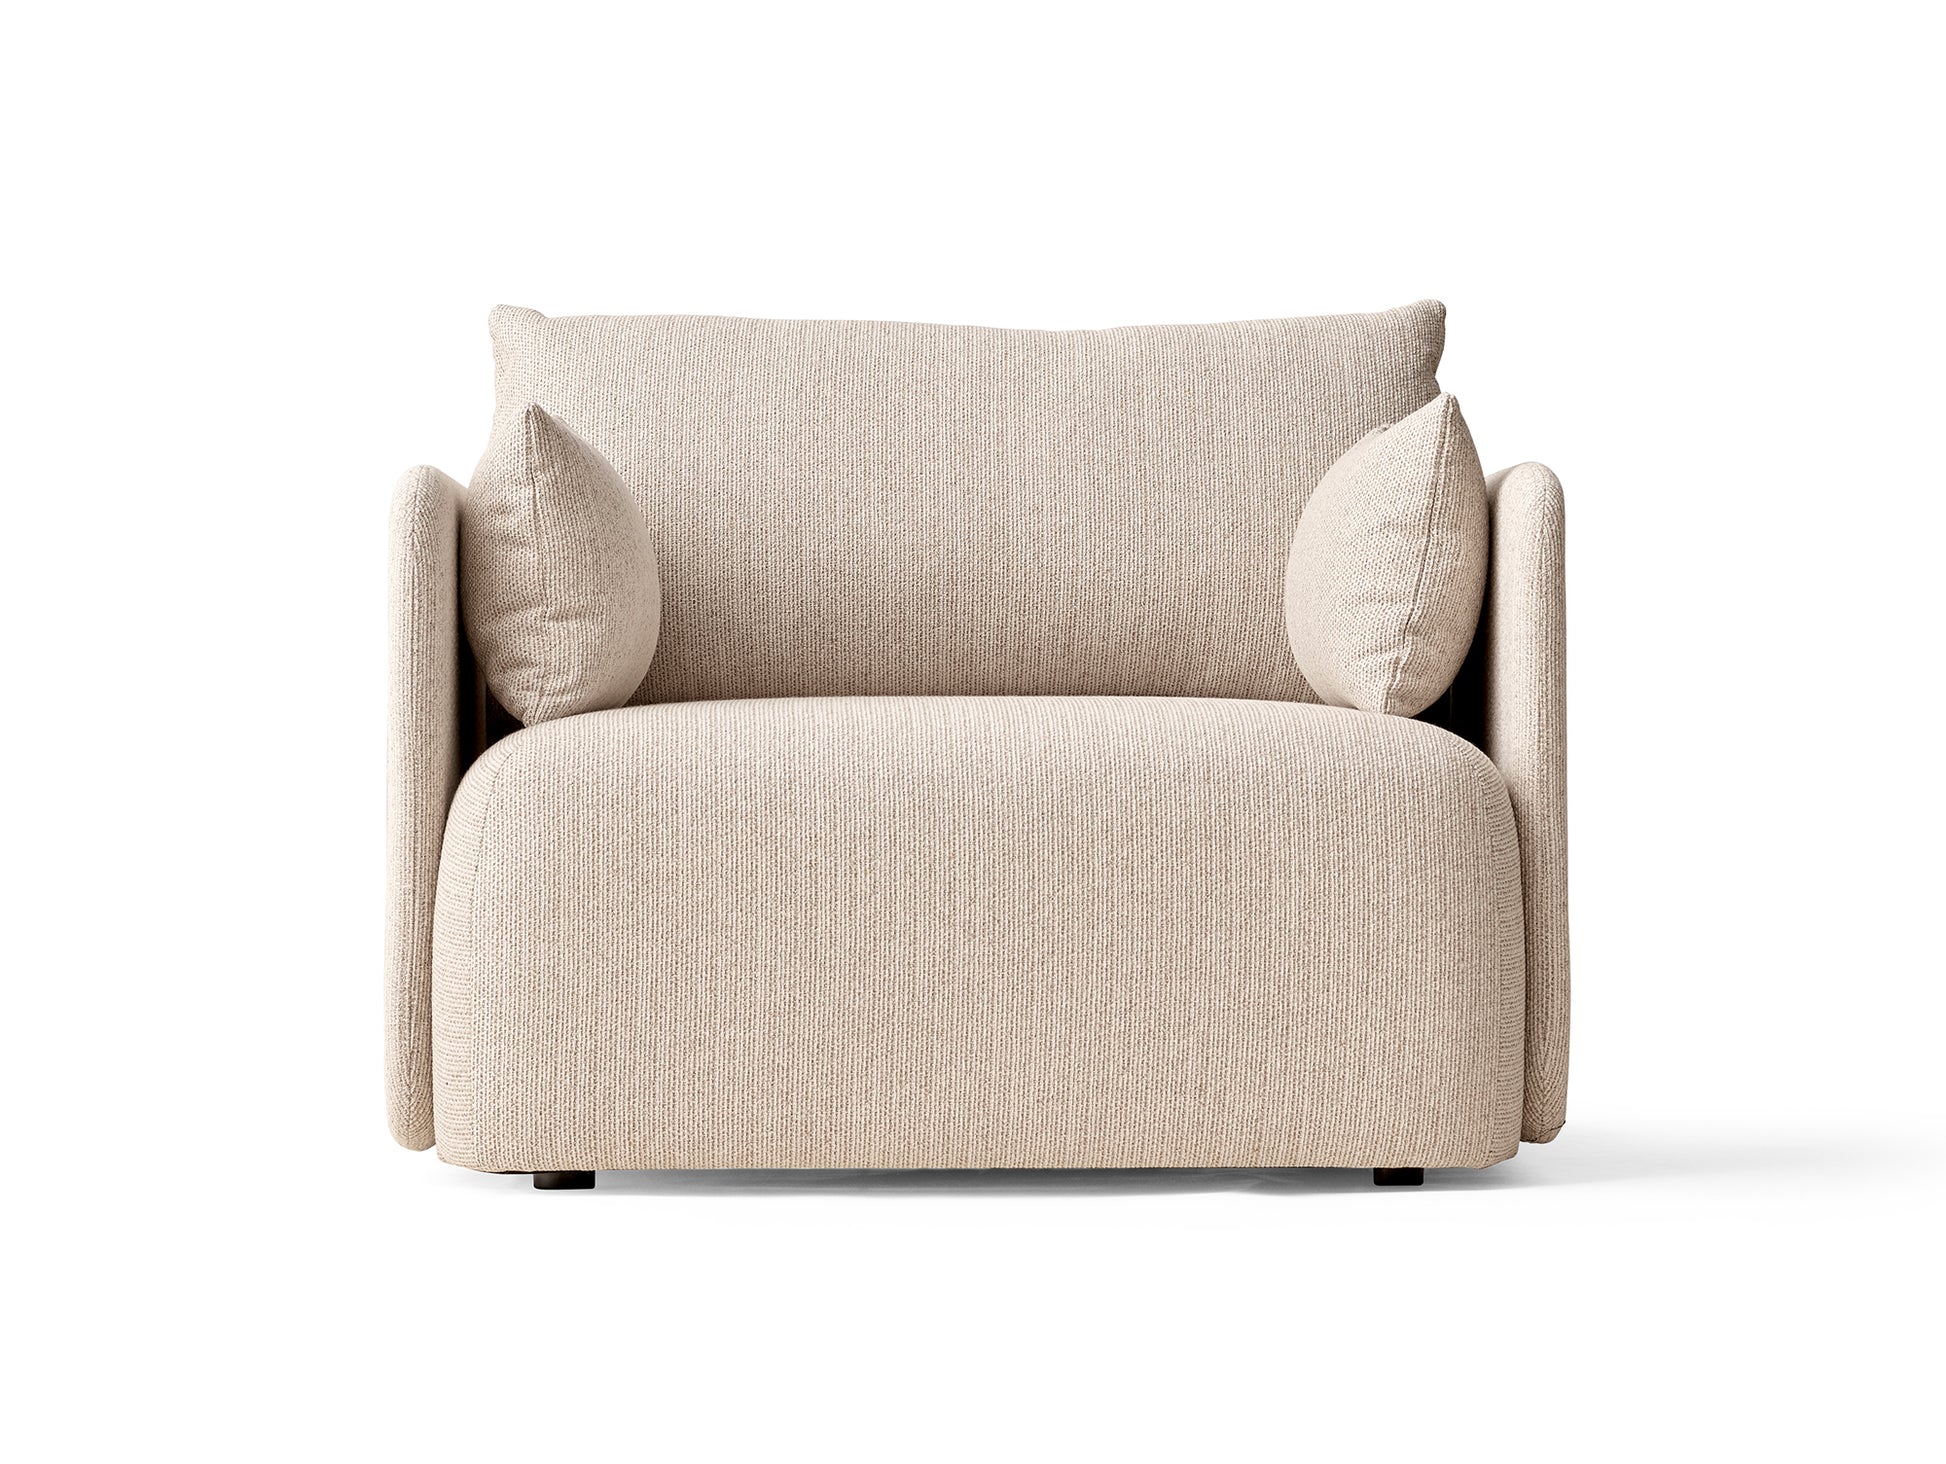 Offset 1-Seater Sofa by Menu - Savanna 0202